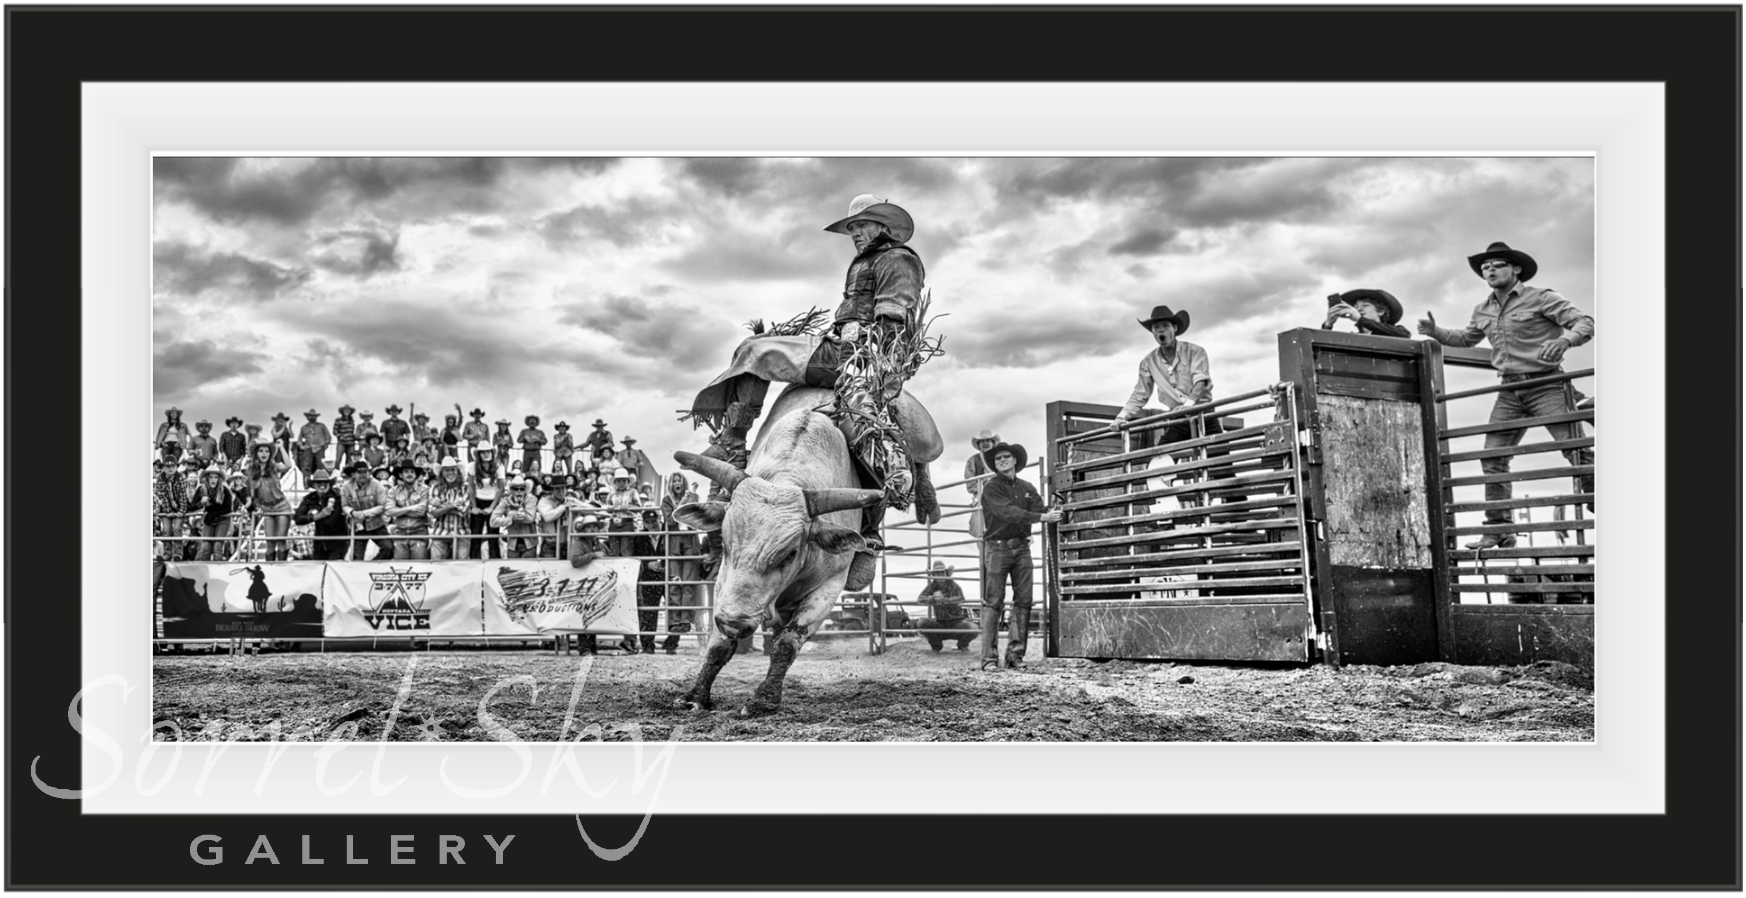 Rodeo-Photographic Print-David Yarrow-Sorrel Sky Gallery